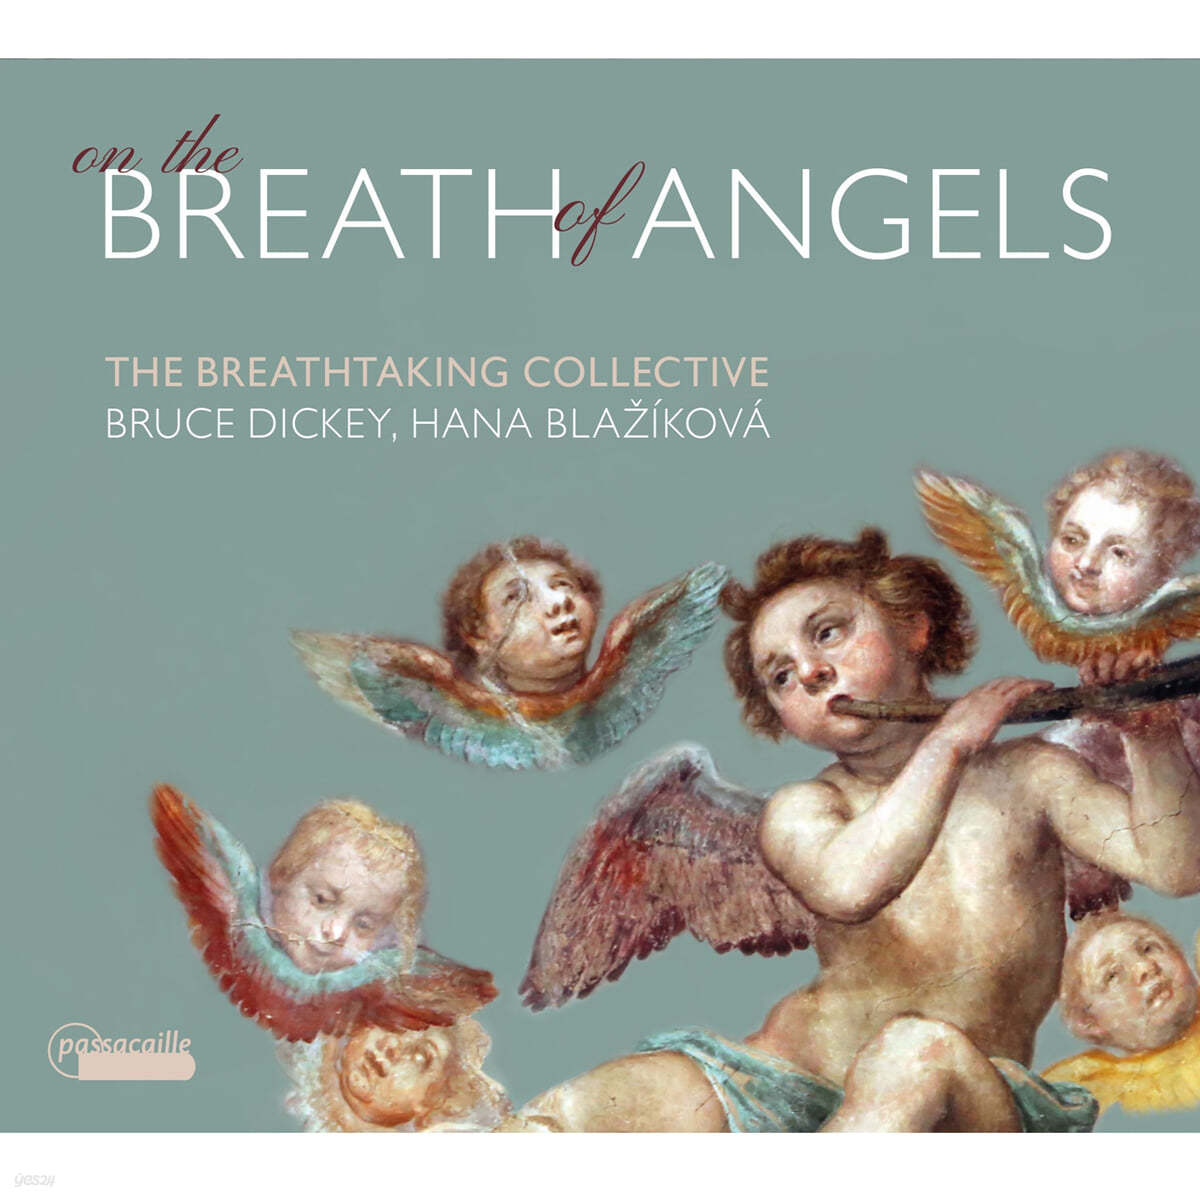 The Breathtaking Collective 카발리 / 딘디아 / 보논치니 / 스카를라티 외 - 천사의 숨결 (Cavalli / d'India / Bononcini / Scarlatti - On the Breath of Angels) 